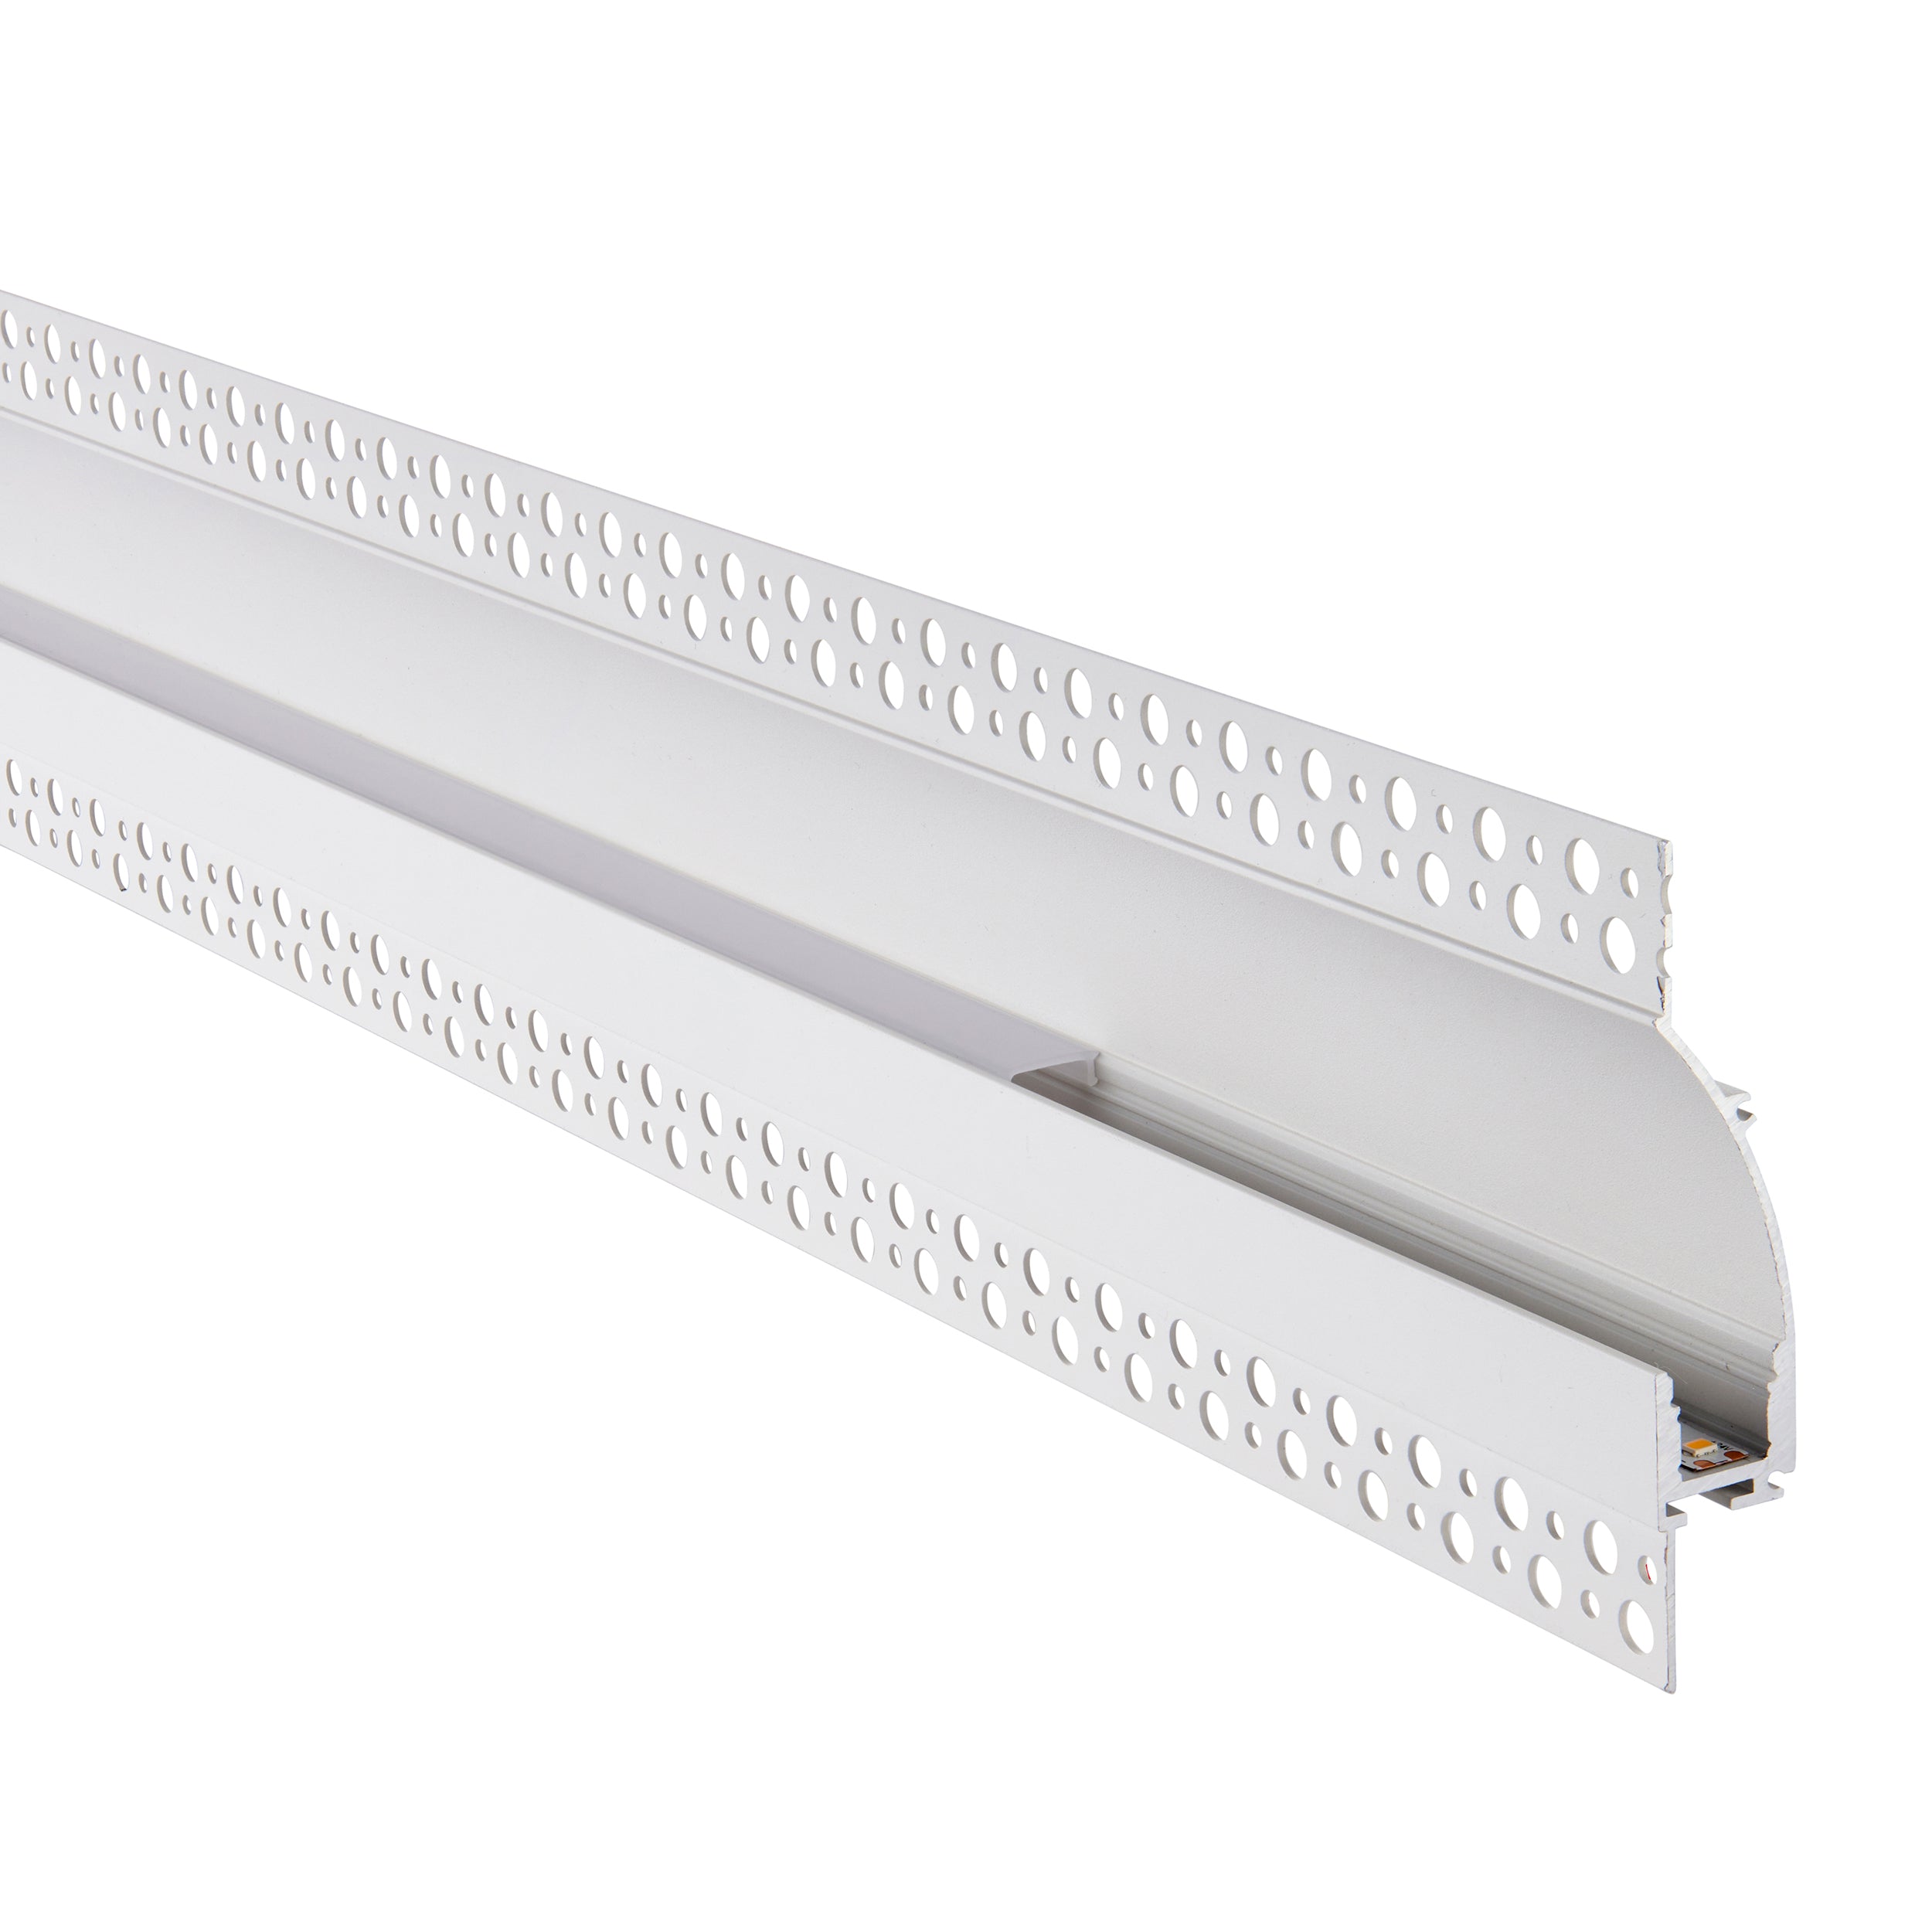 Rigel Wall Flange Plaster-In 2M Aluminium Profile/Extrusion White